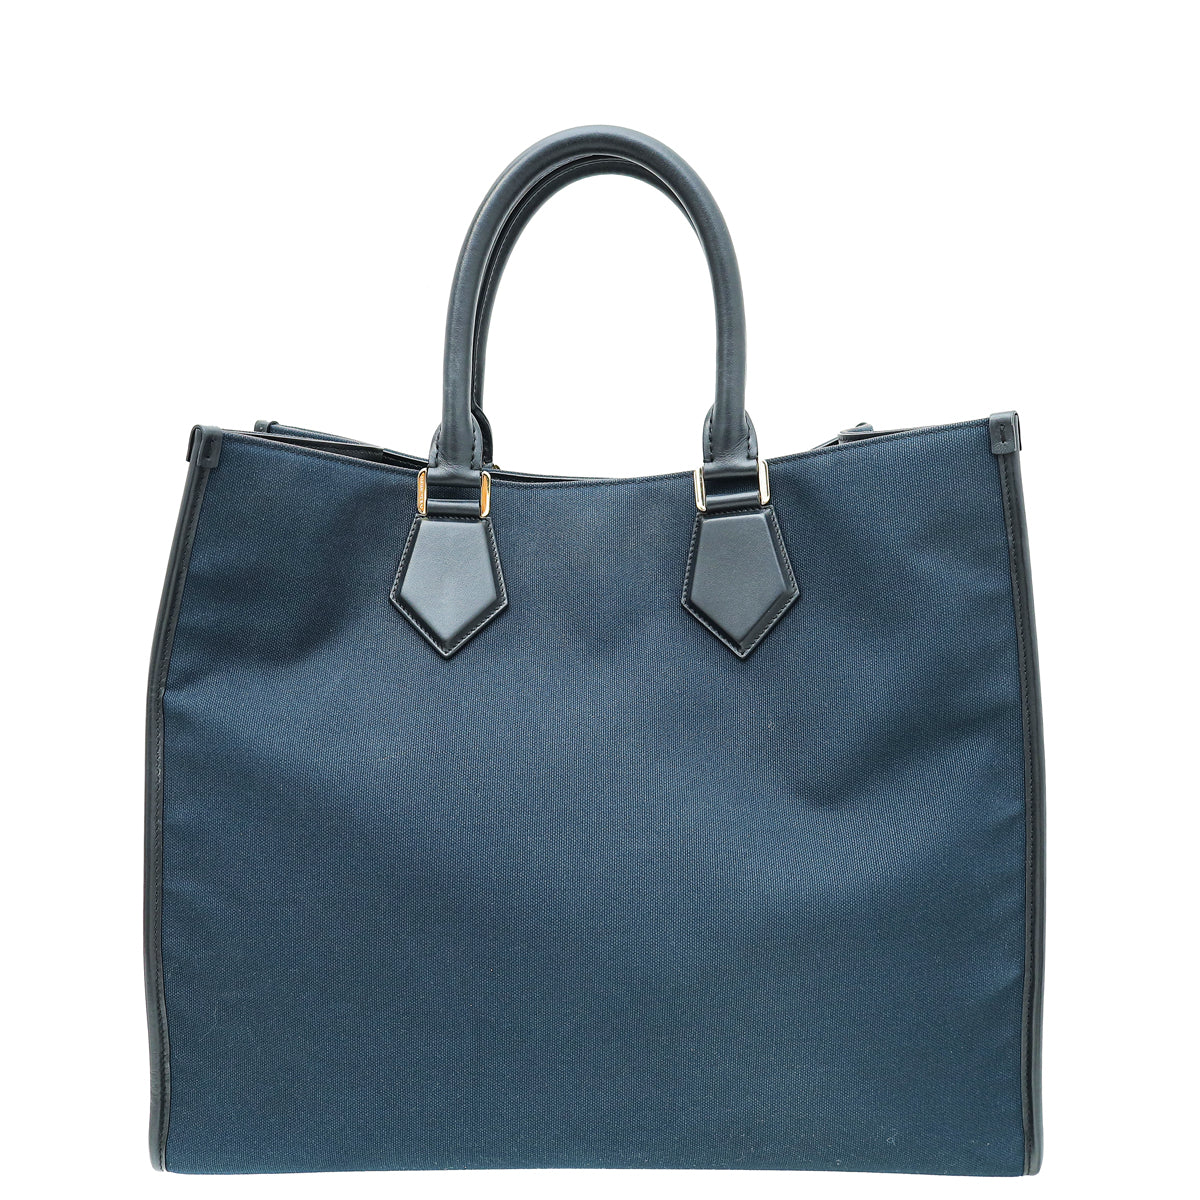 Dolce & Gabbana Bicolor Shopper Bag with Nappa Details